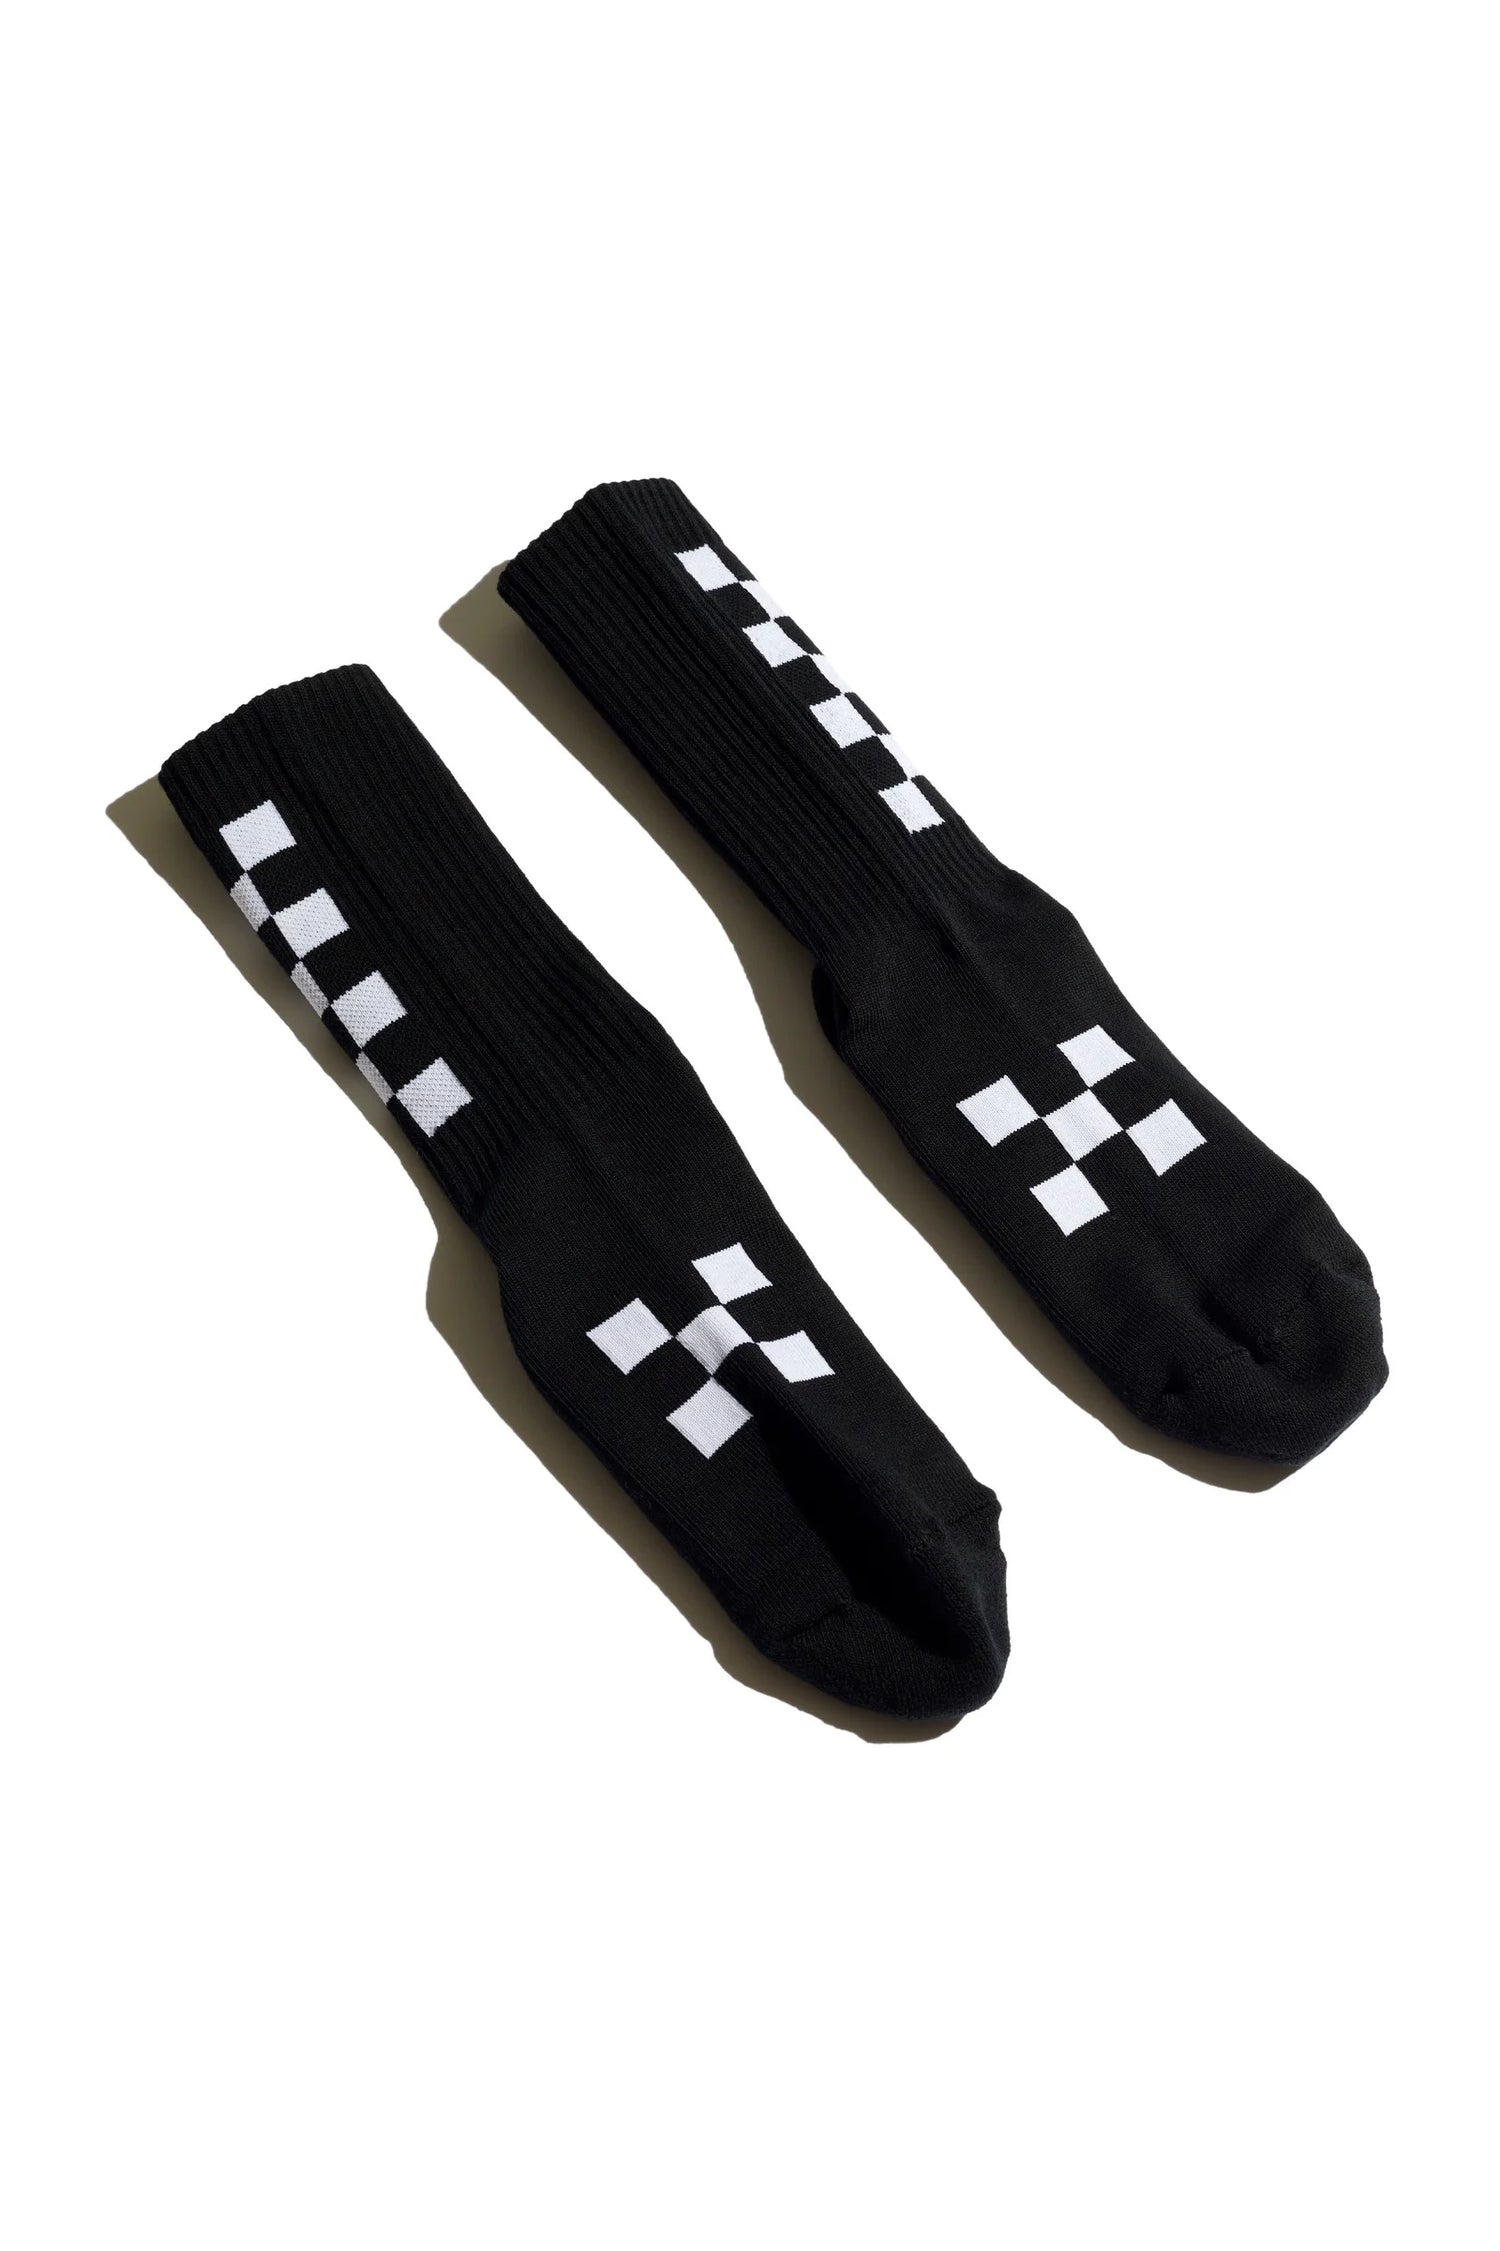 Aerodynamics socks, Made in Japan